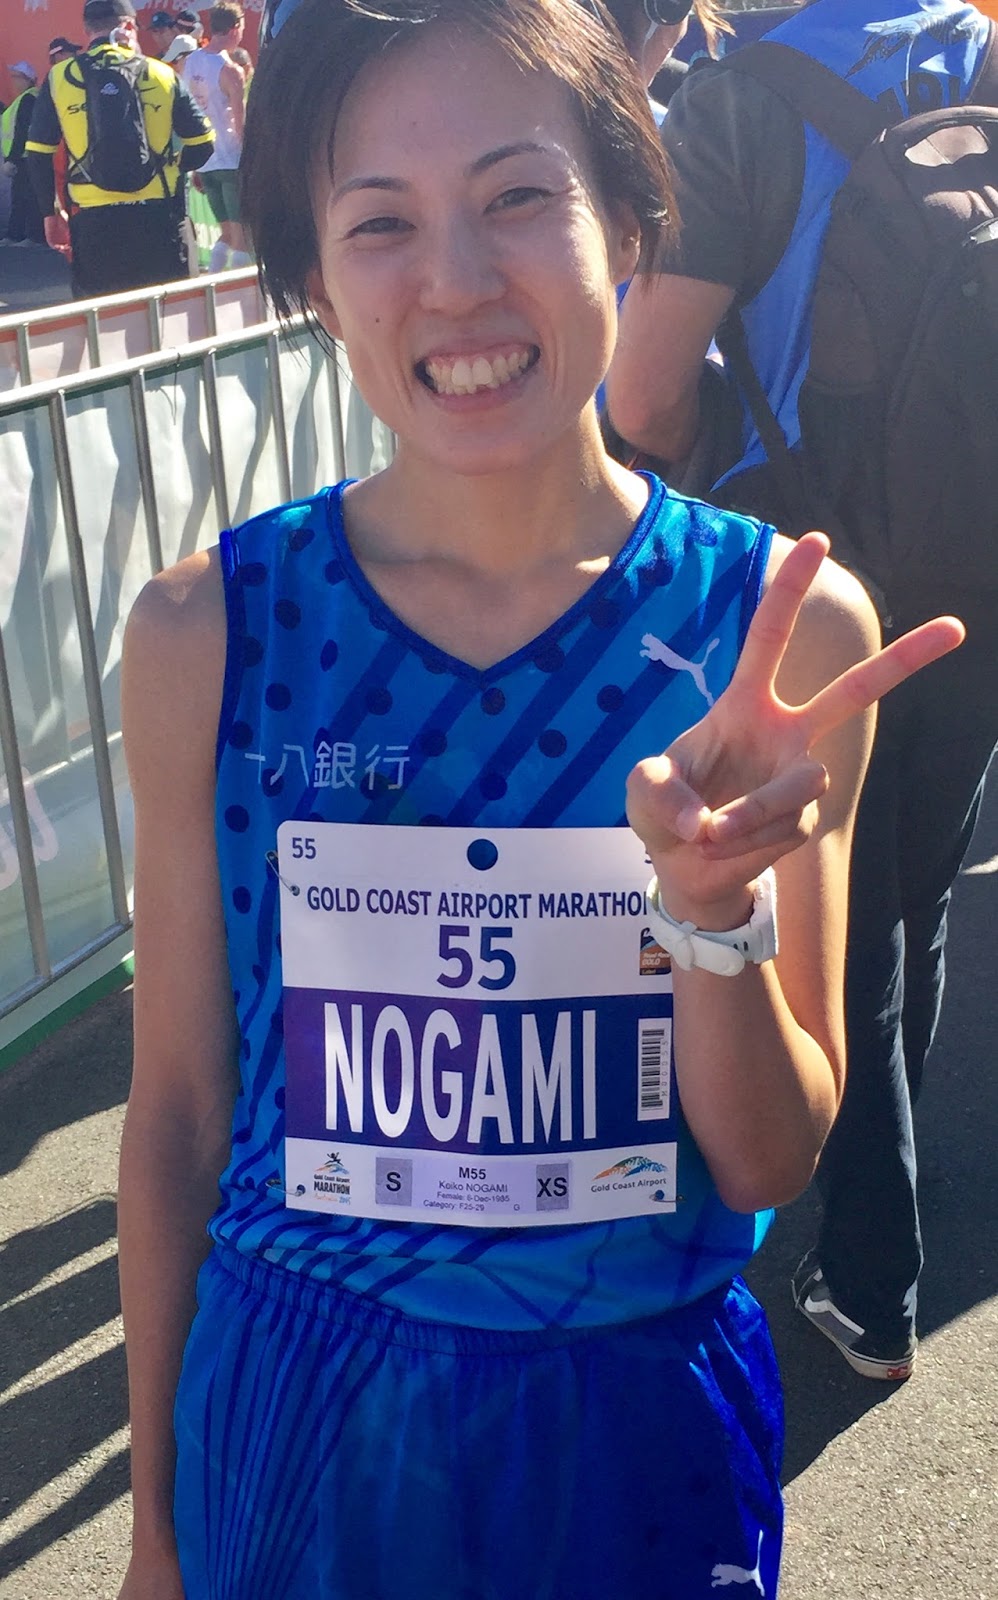 Nogami to Represent Japan at Asian Marathon Championships